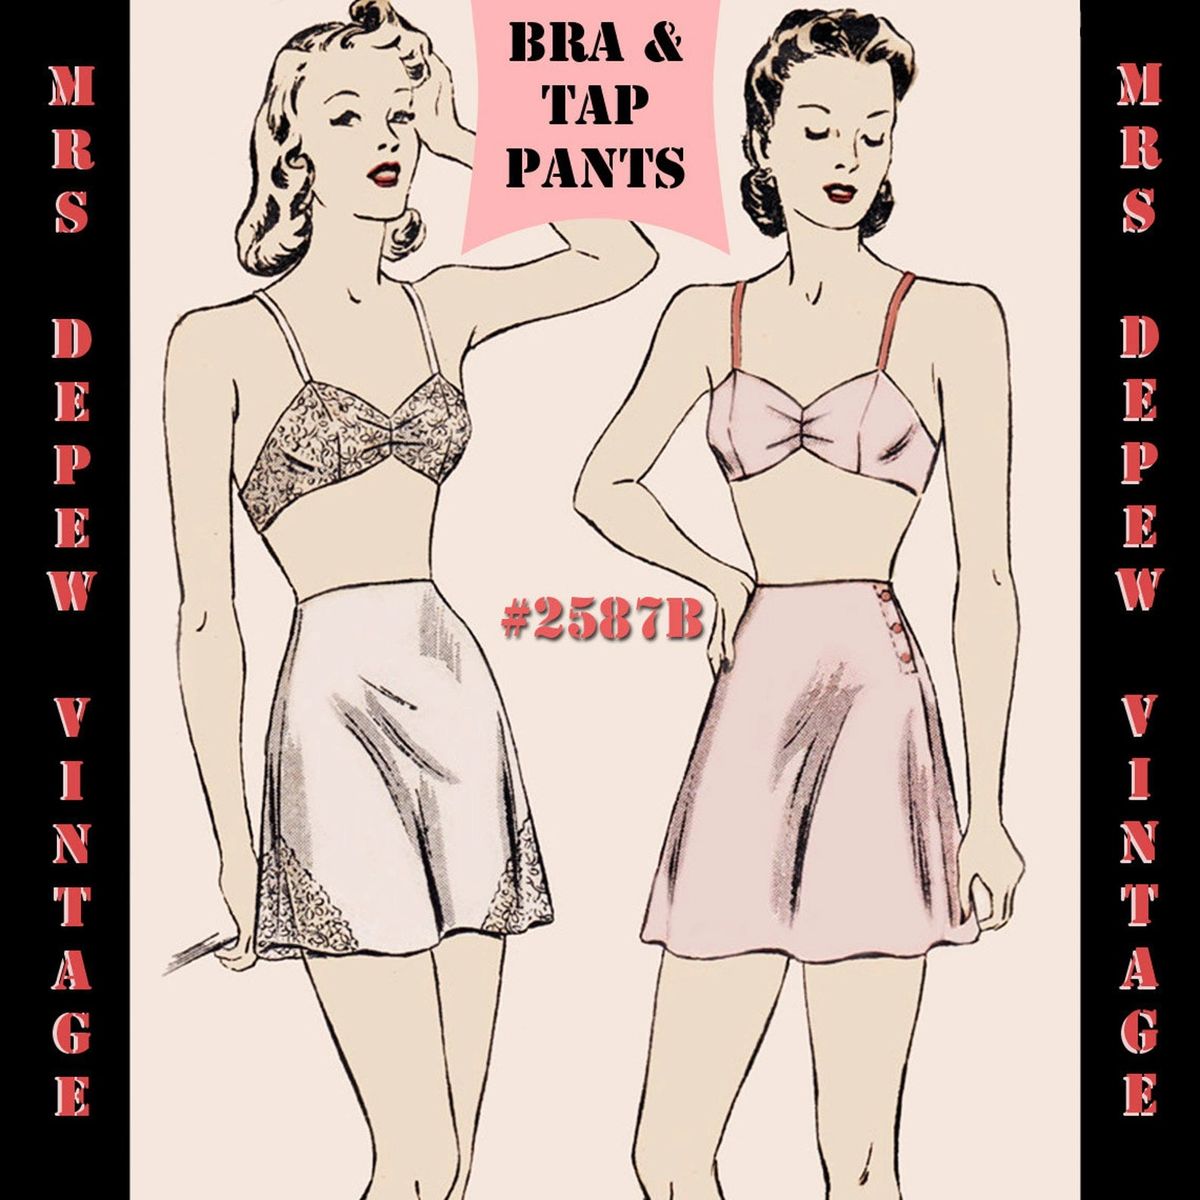 Vintage Sewing Pattern 1940s Ladies' Ranch Pants Trouser 3177